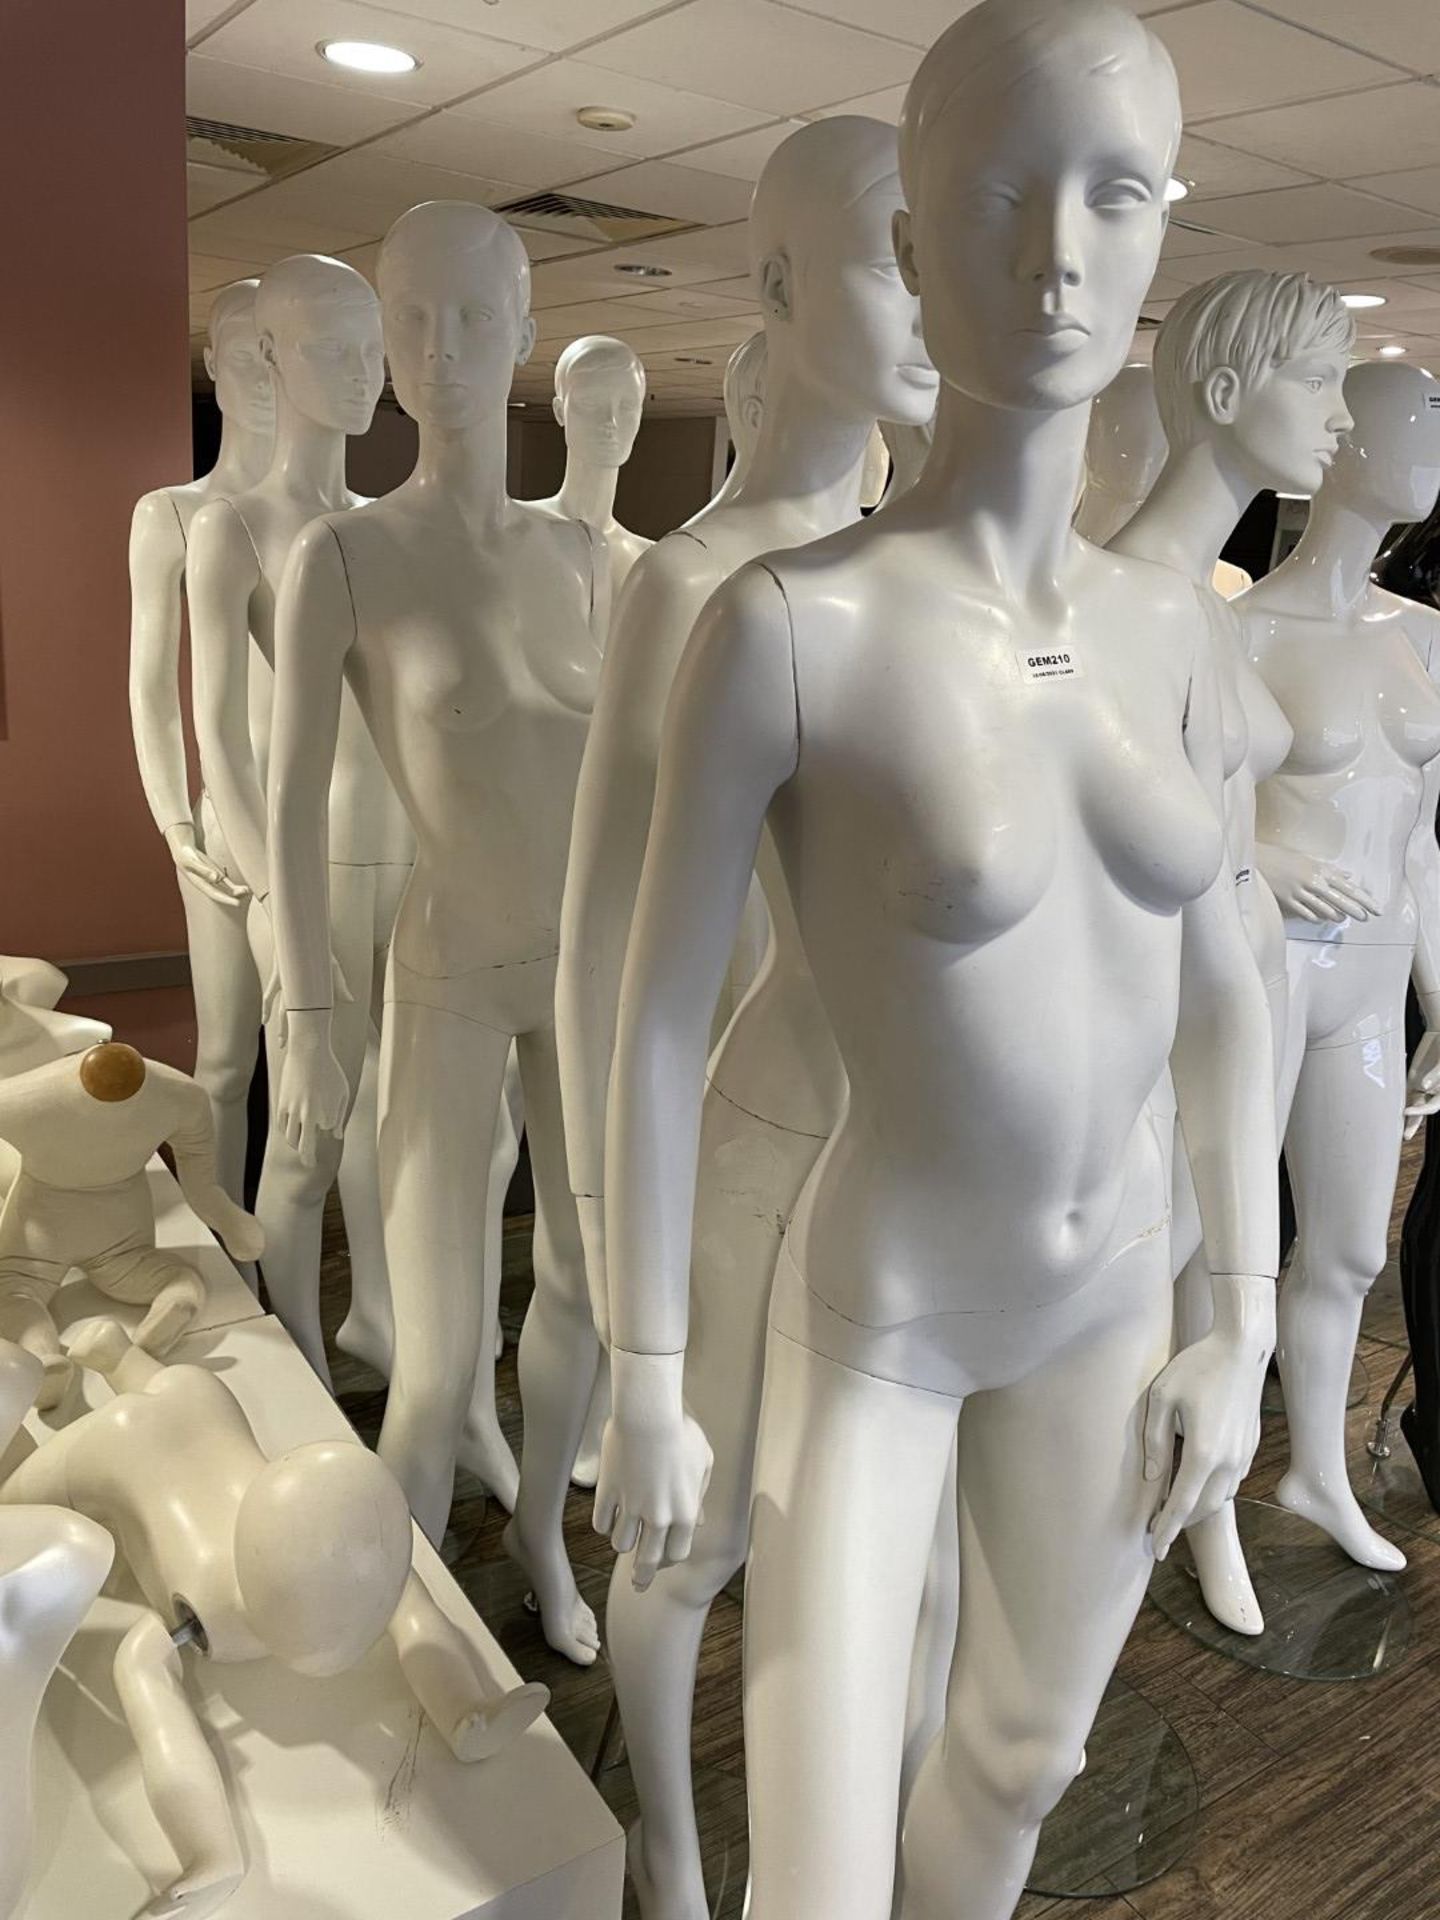 5 x Full Size Female Mannequins on Stands - CL670 - Ref: GEM210 - Location: Gravesend, DA11 - Image 4 of 8